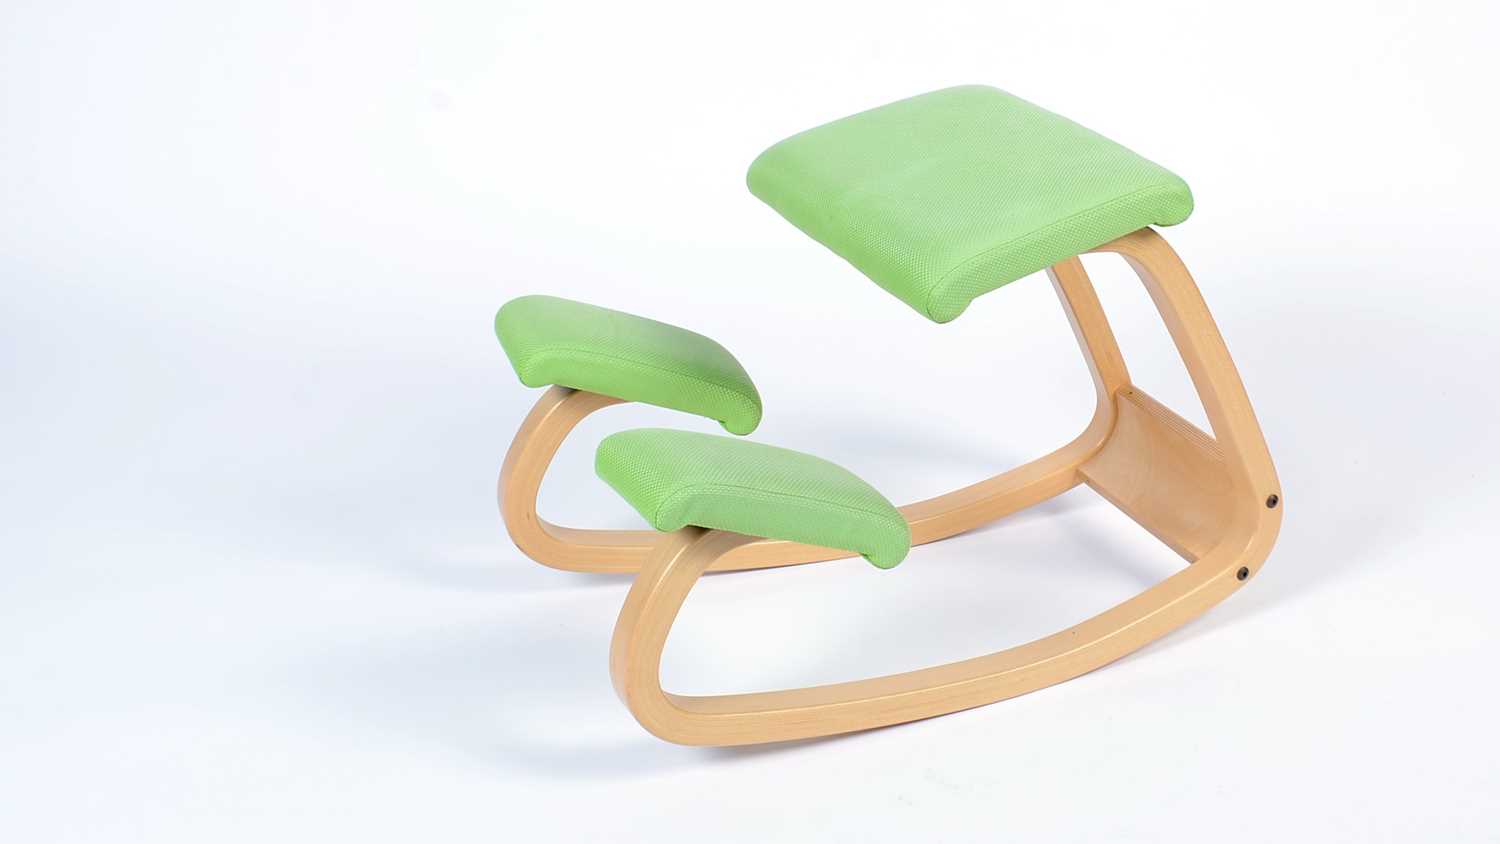 Stokke after a design by Peter Opsvik: a bent plywood rocking/kneeling chair.